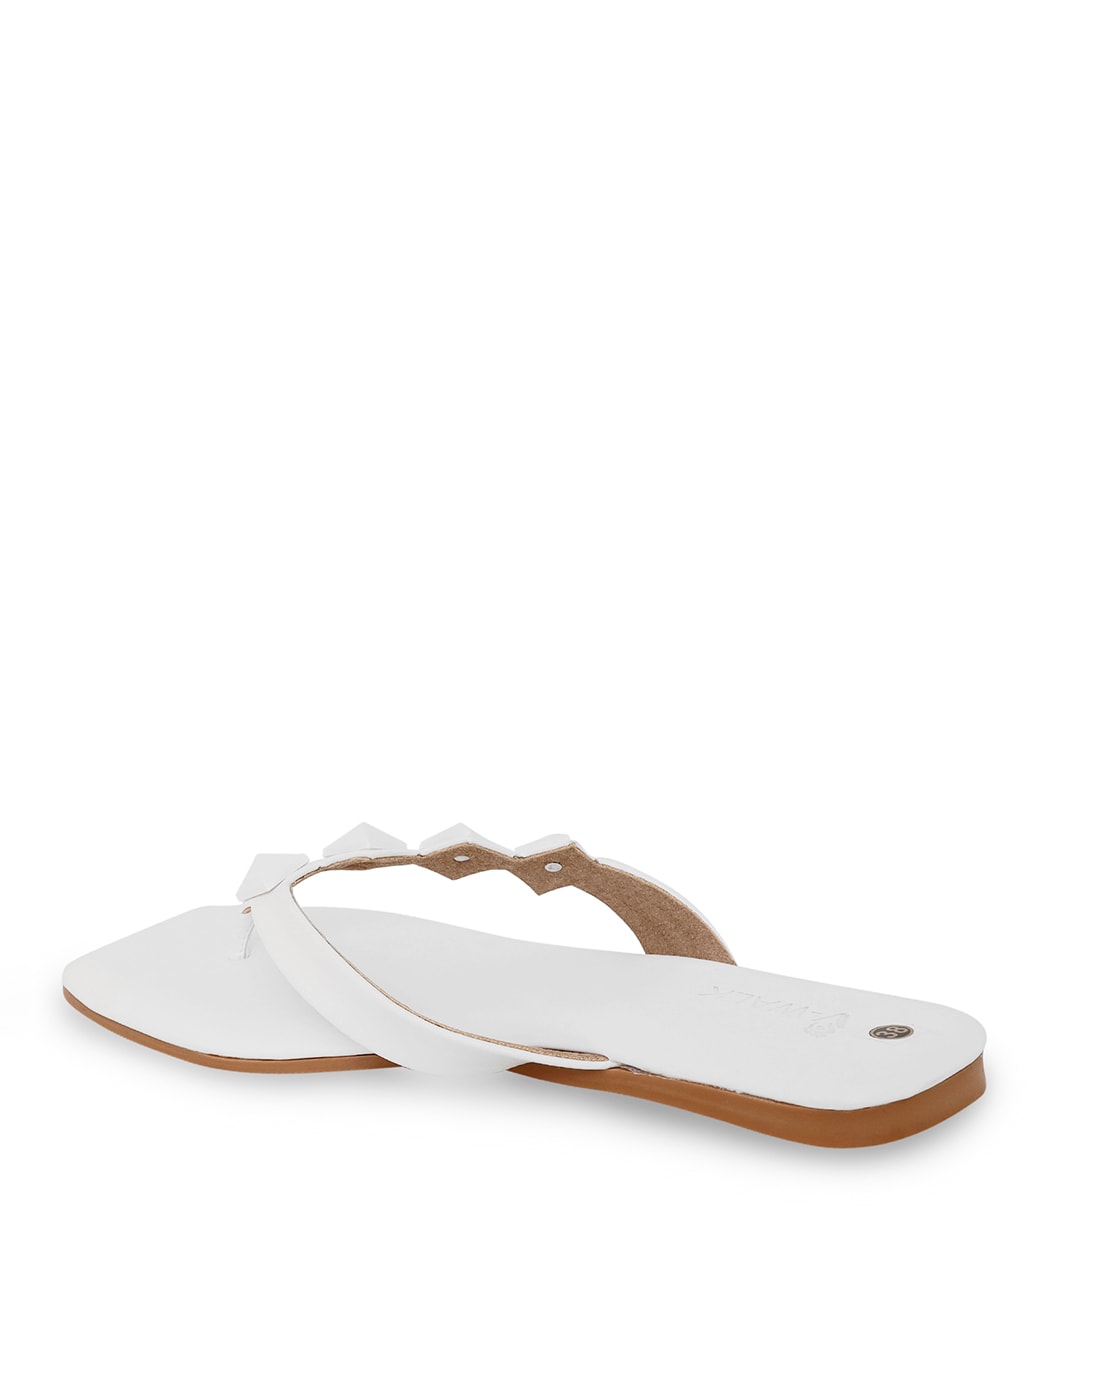 yinguo thong sandals sling-back sandals for women summer open roman buckle flip  flops strap shoes flat open toe sandals women's sandals white size 5.5 -  Walmart.com